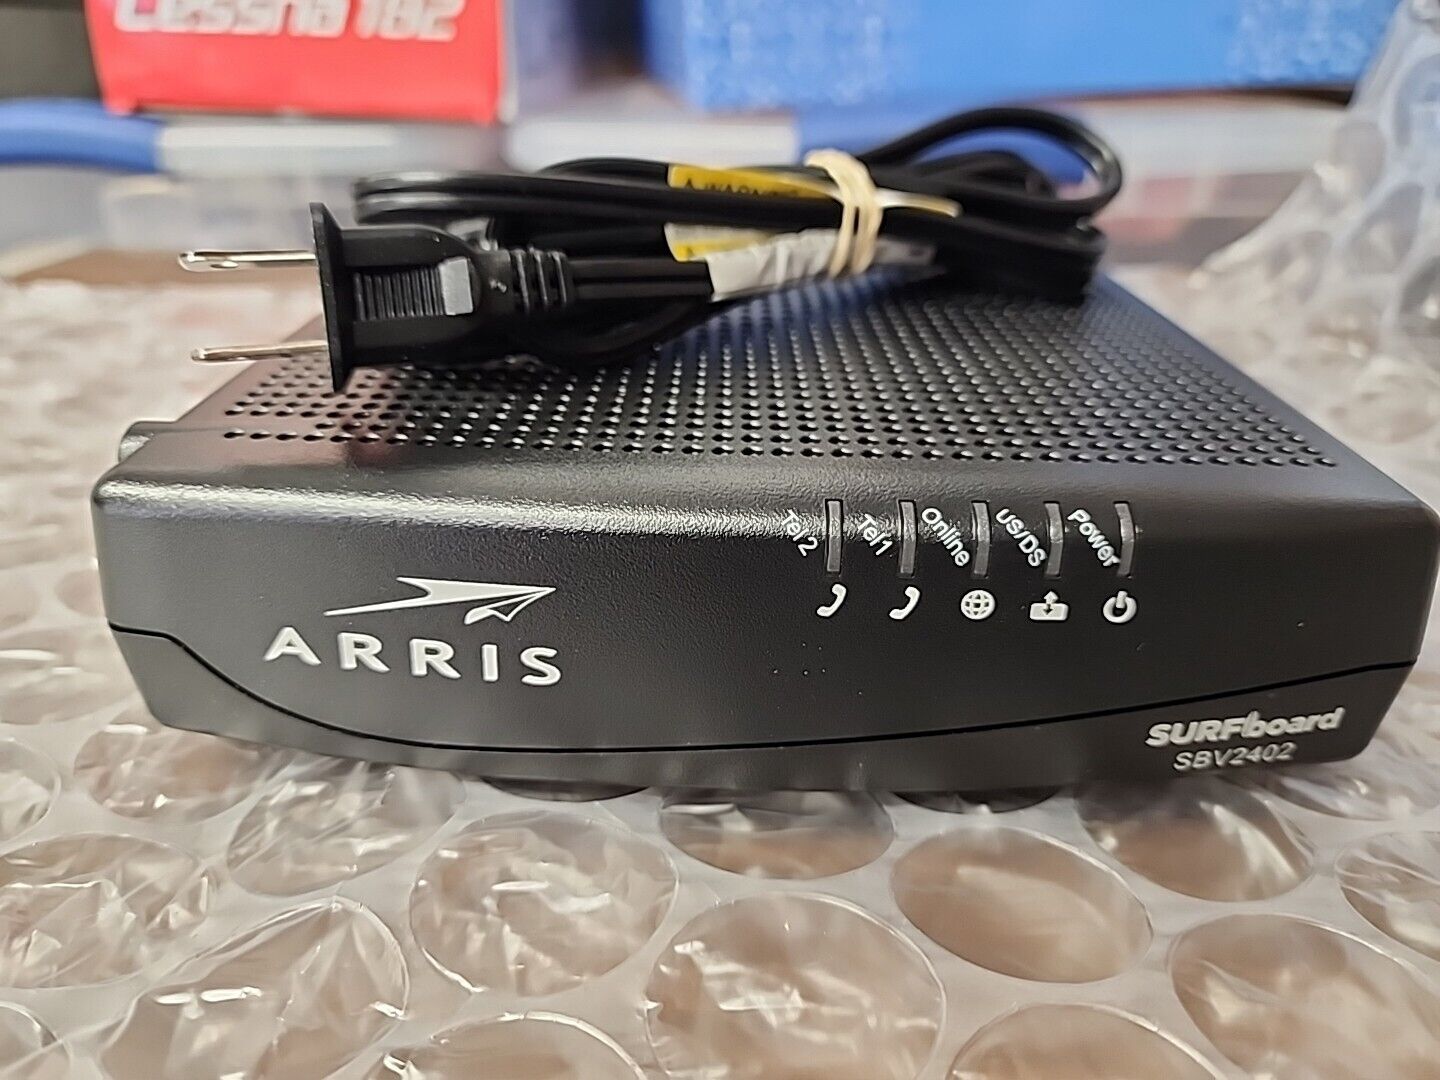 ARRIS SURFboard SBV2402 DOCSIS 3.0 Cable Modem Comcast Xfinity 1 Gbps Port